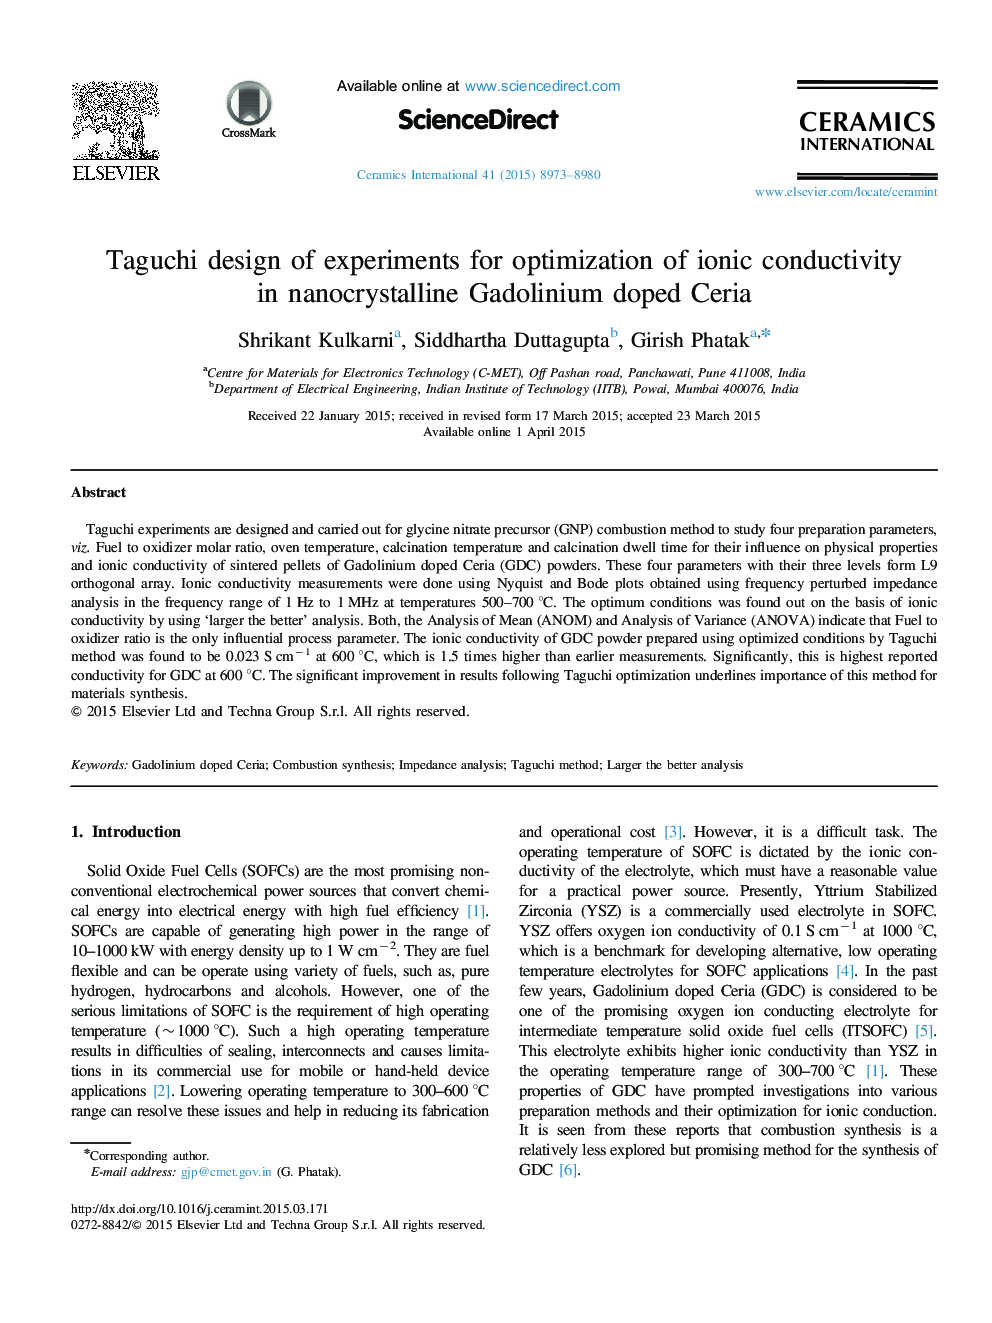 Taguchi design of experiments for optimization of ionic conductivity in nanocrystalline Gadolinium doped Ceria